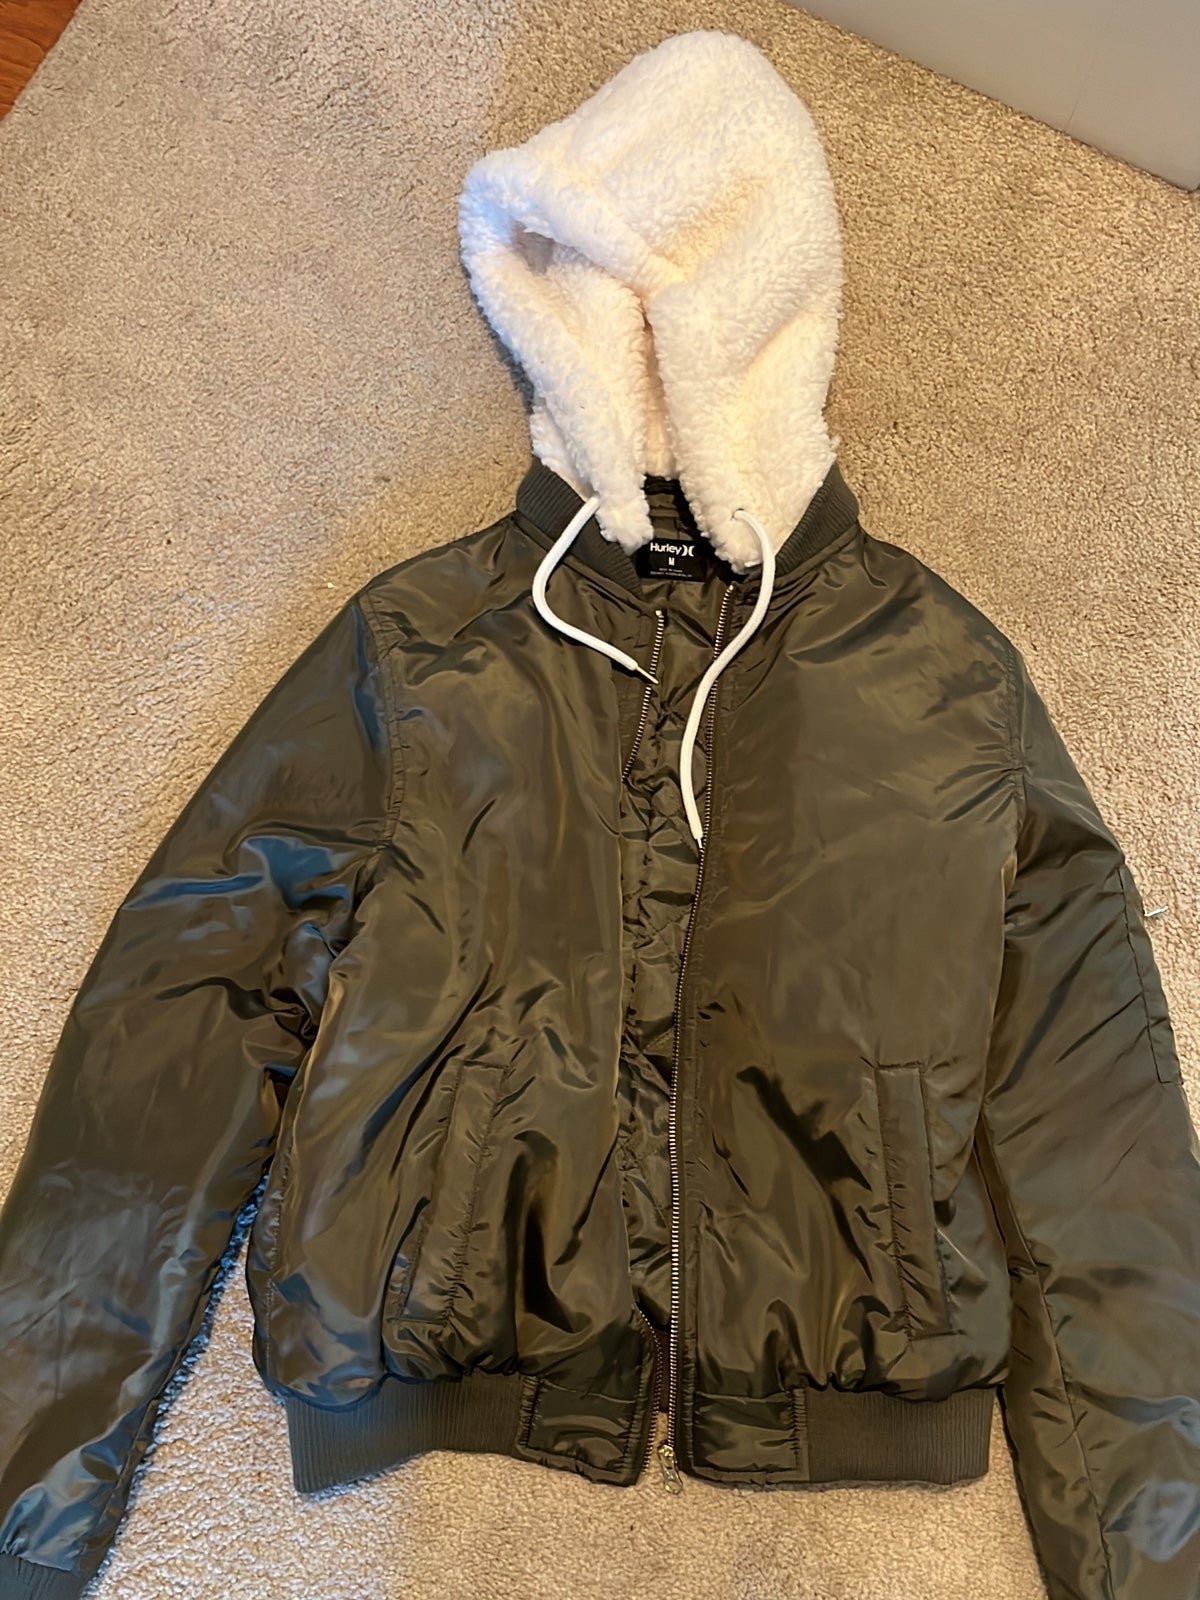 reasonable price Olive Hurley jacket iz10lzZzy hot sale